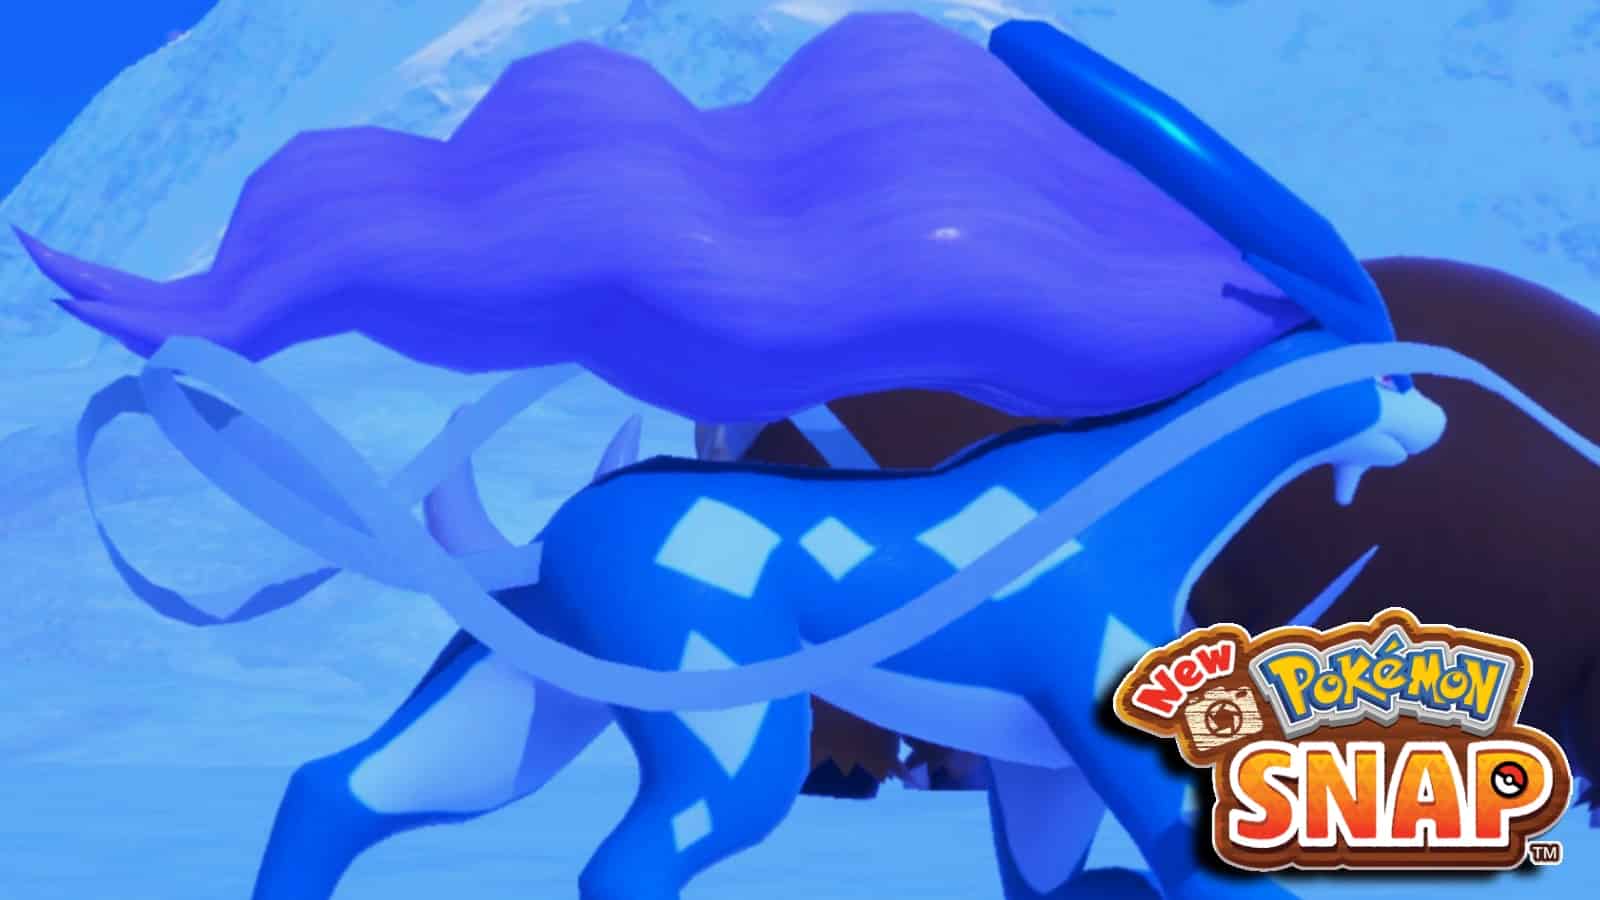 Suicine running in New Pokemon Snap next to logo